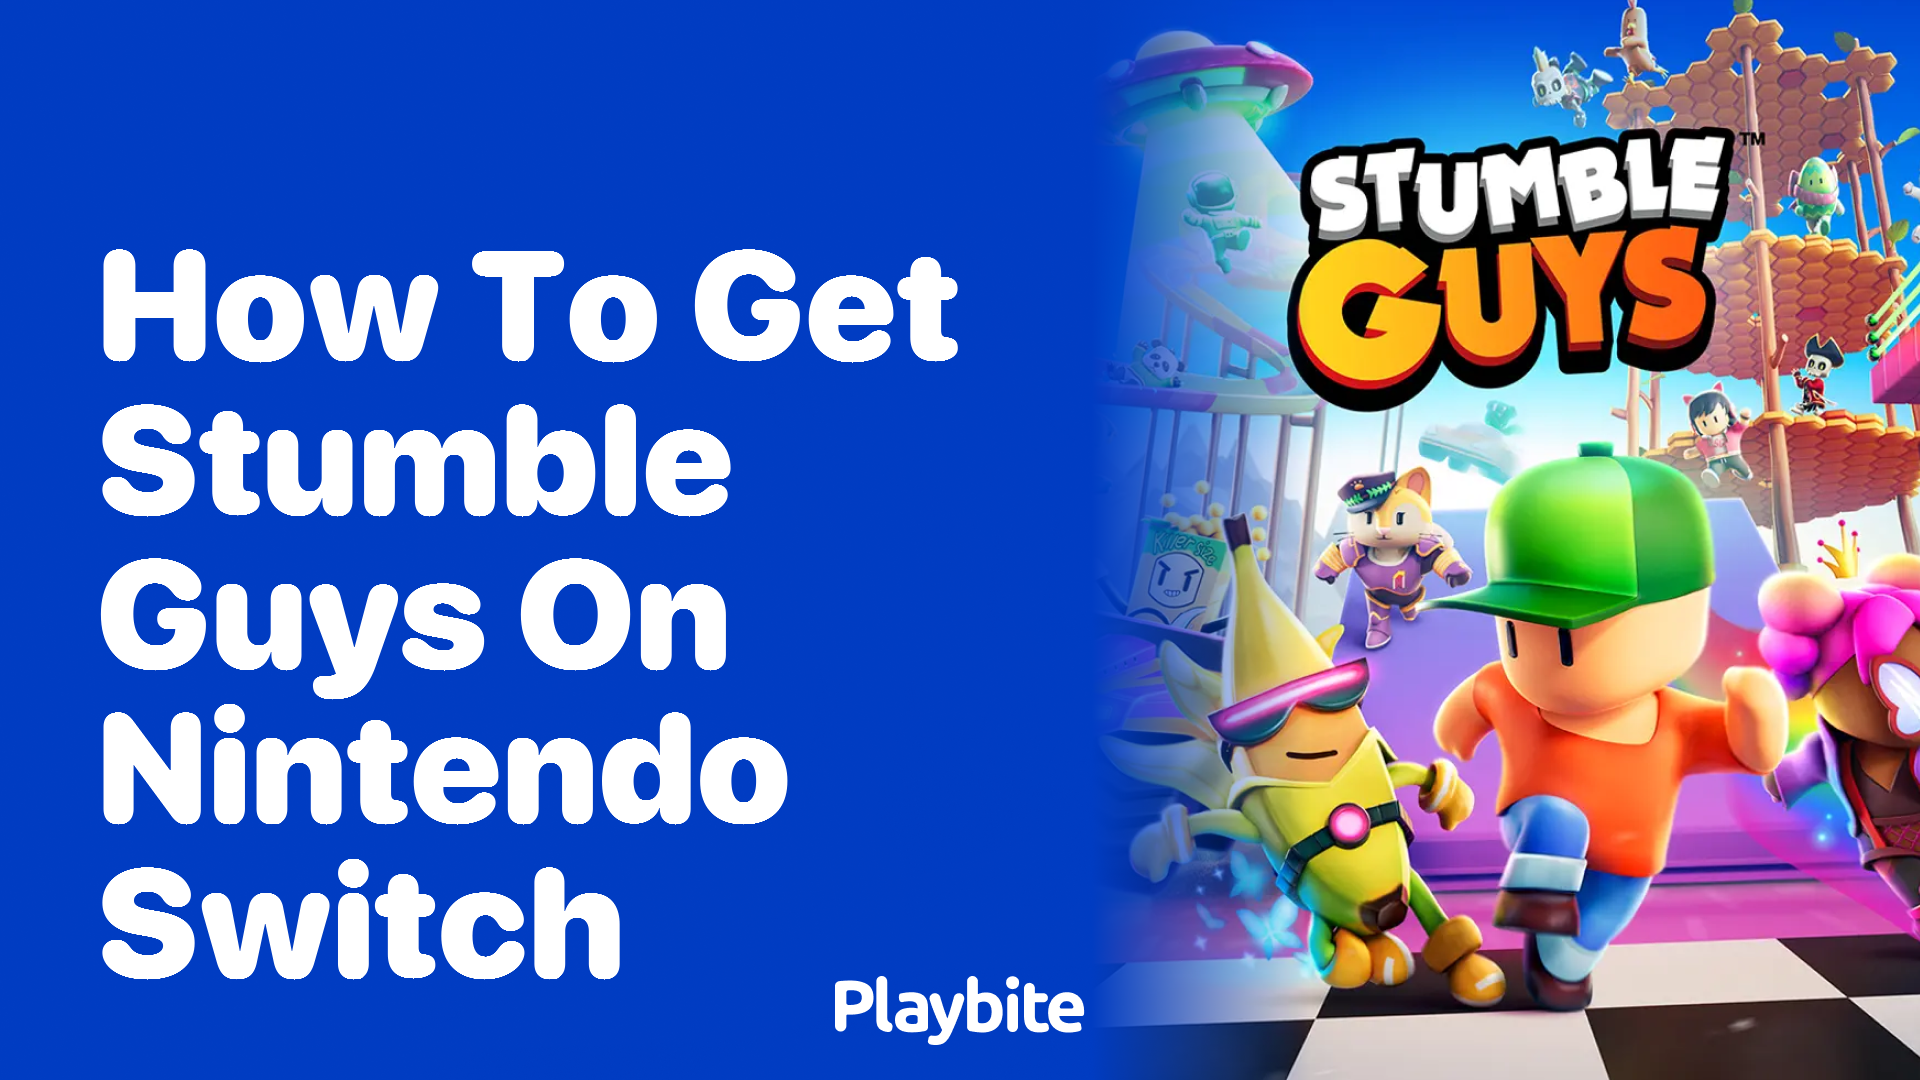 How to Get Stumble Guys on Nintendo Switch